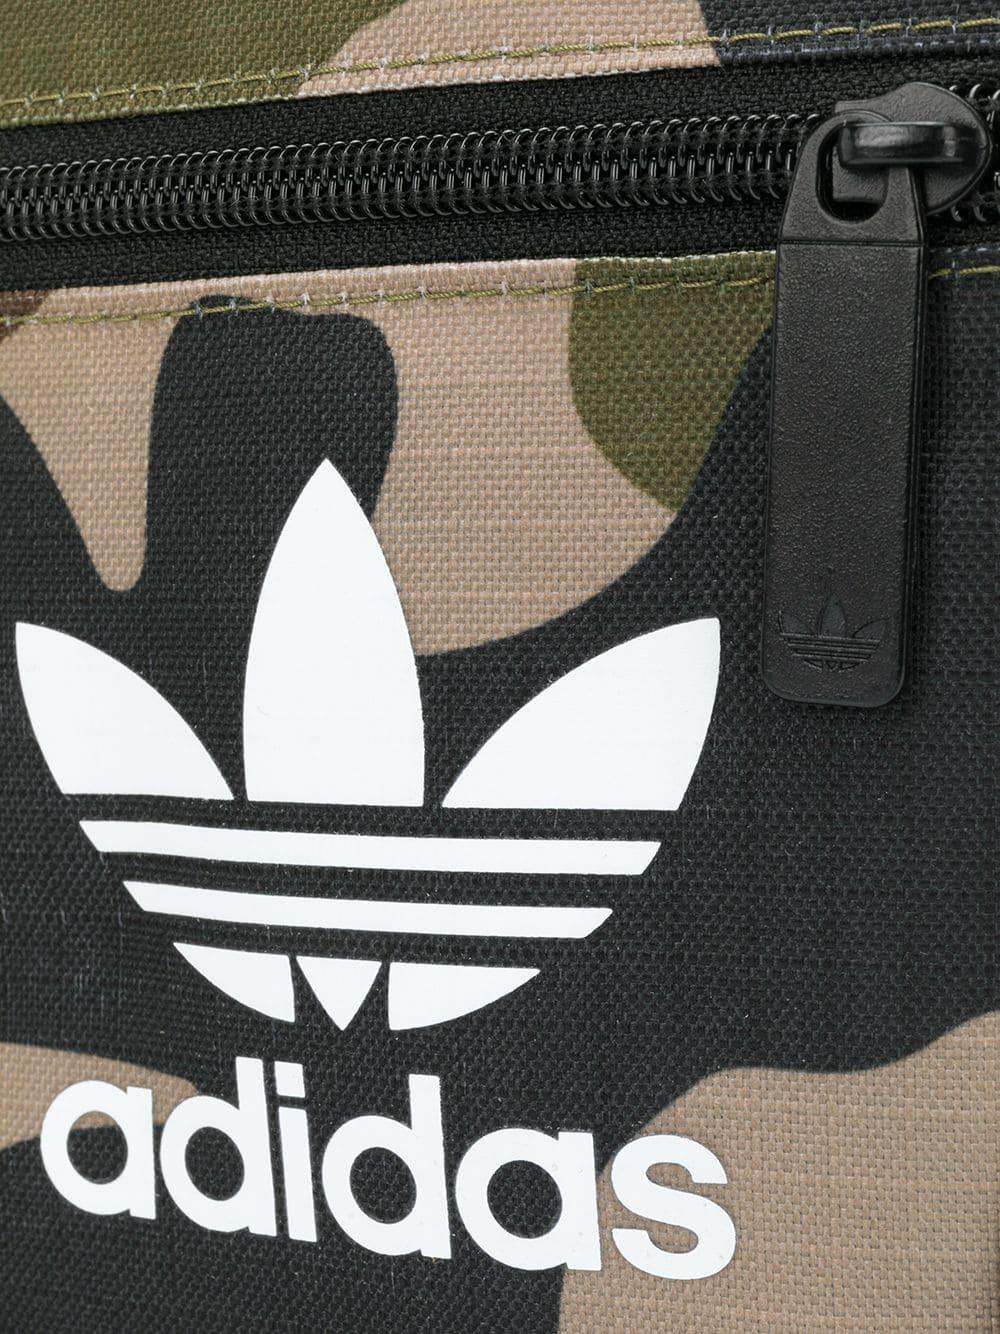 adidas Trefoil Camouflage Shoulder Bag in Green - Lyst